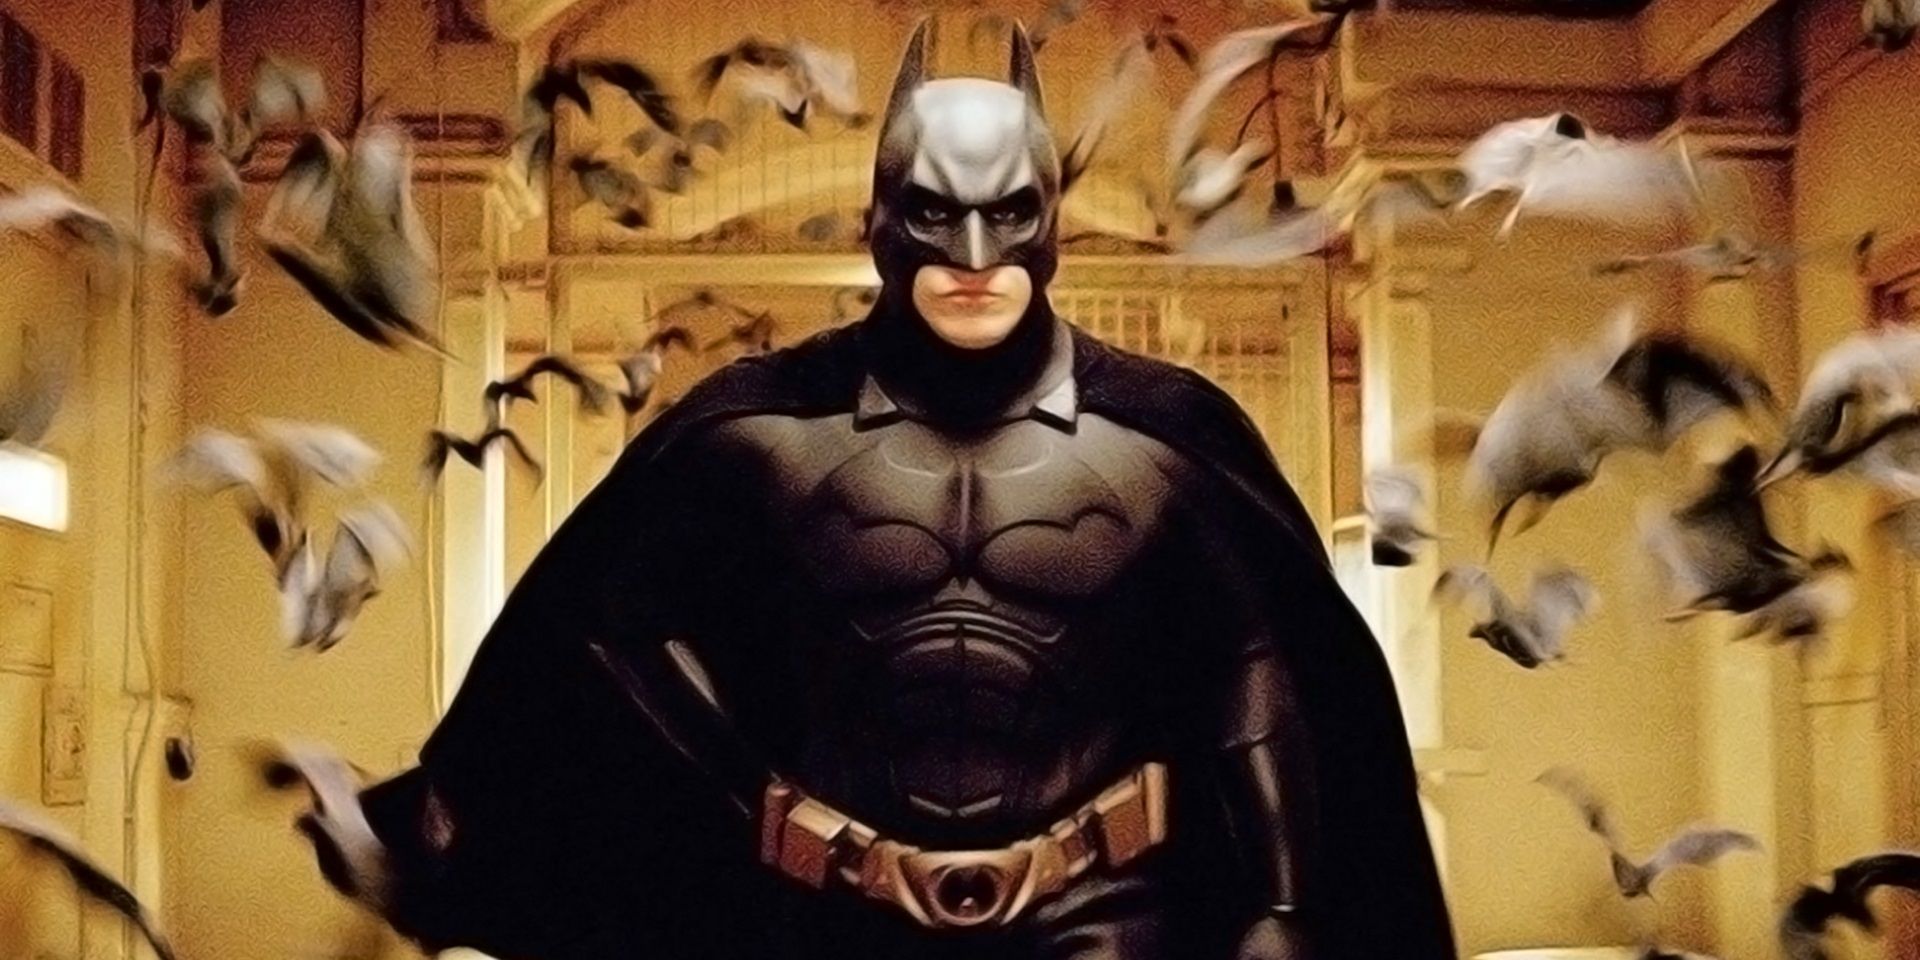 Batman walks through a hallway full of bats in Batman Begins (2005)